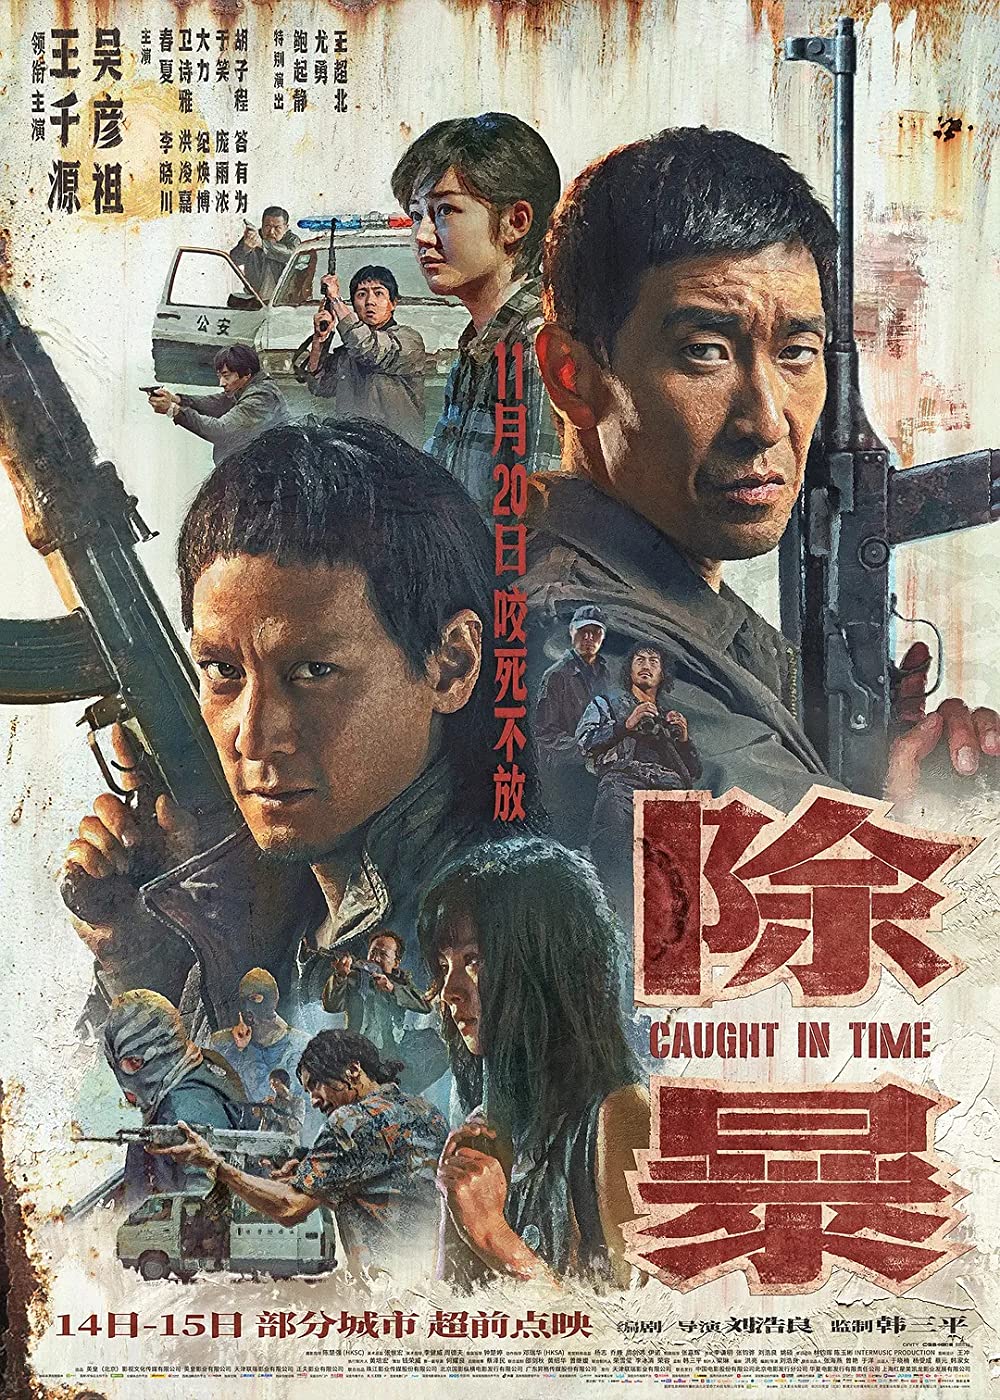 Chu bao Aka Caught in Time (2020) 